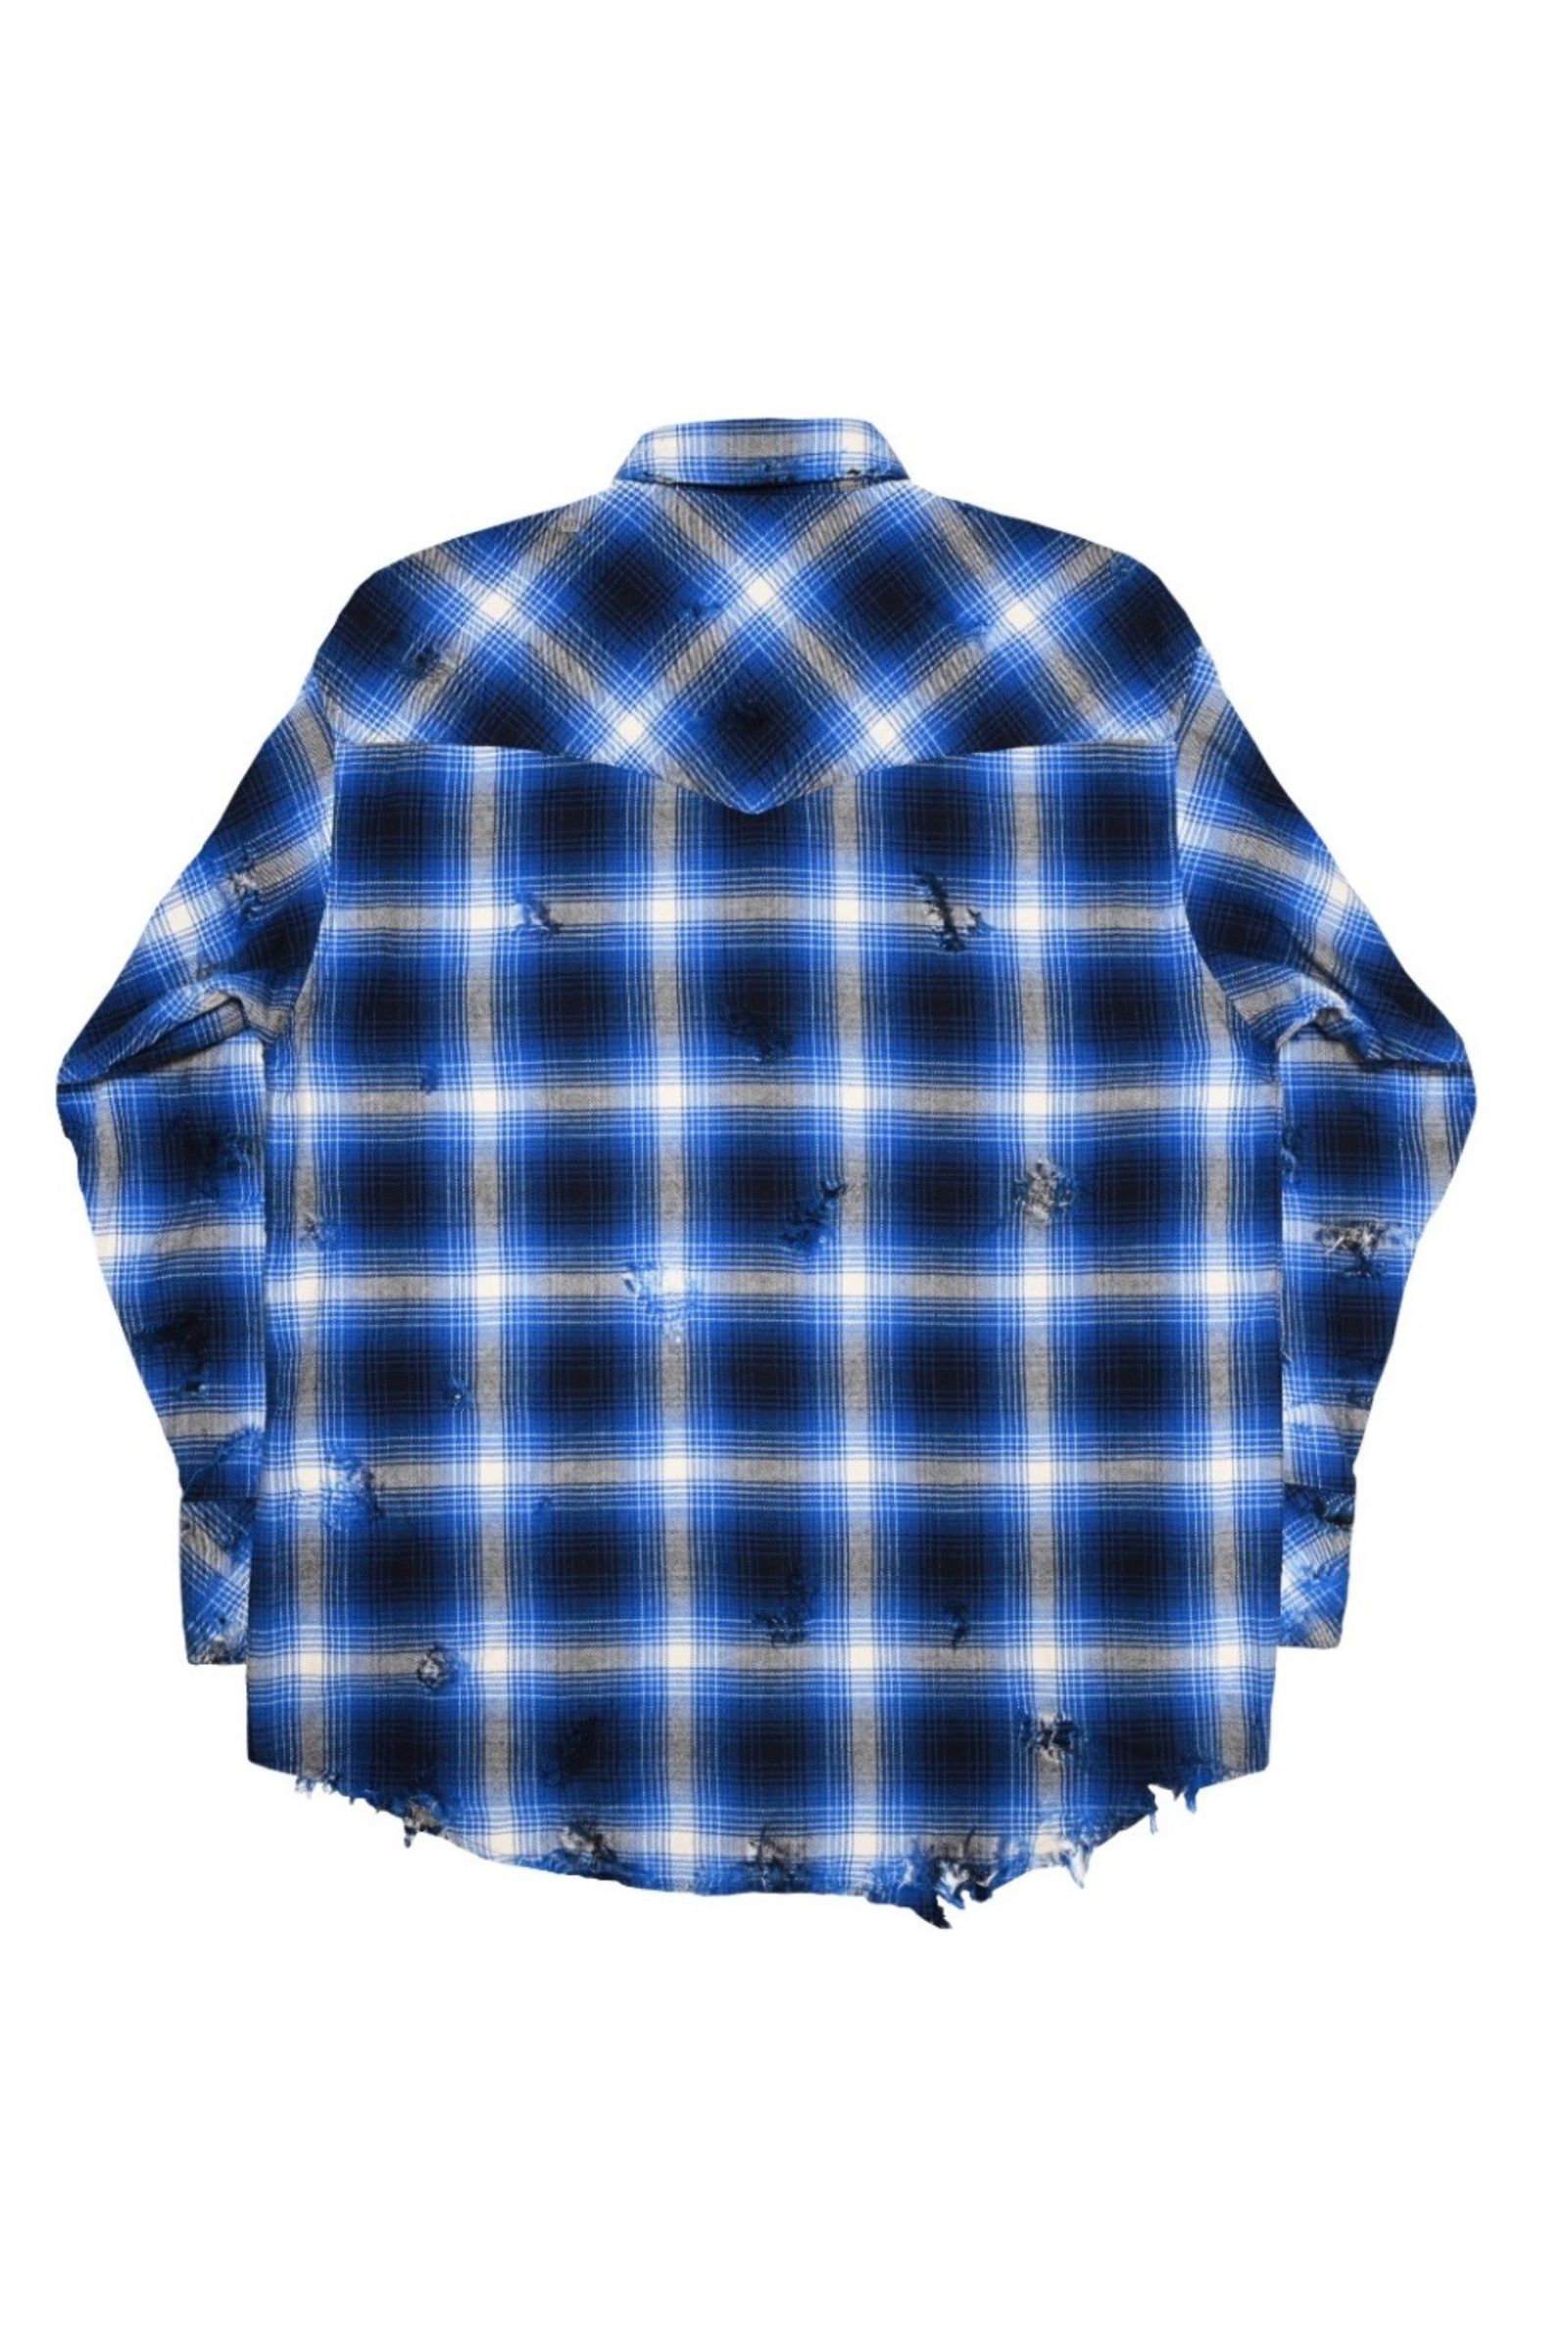 Rafu - Western shirt/BLUE | NapsNote